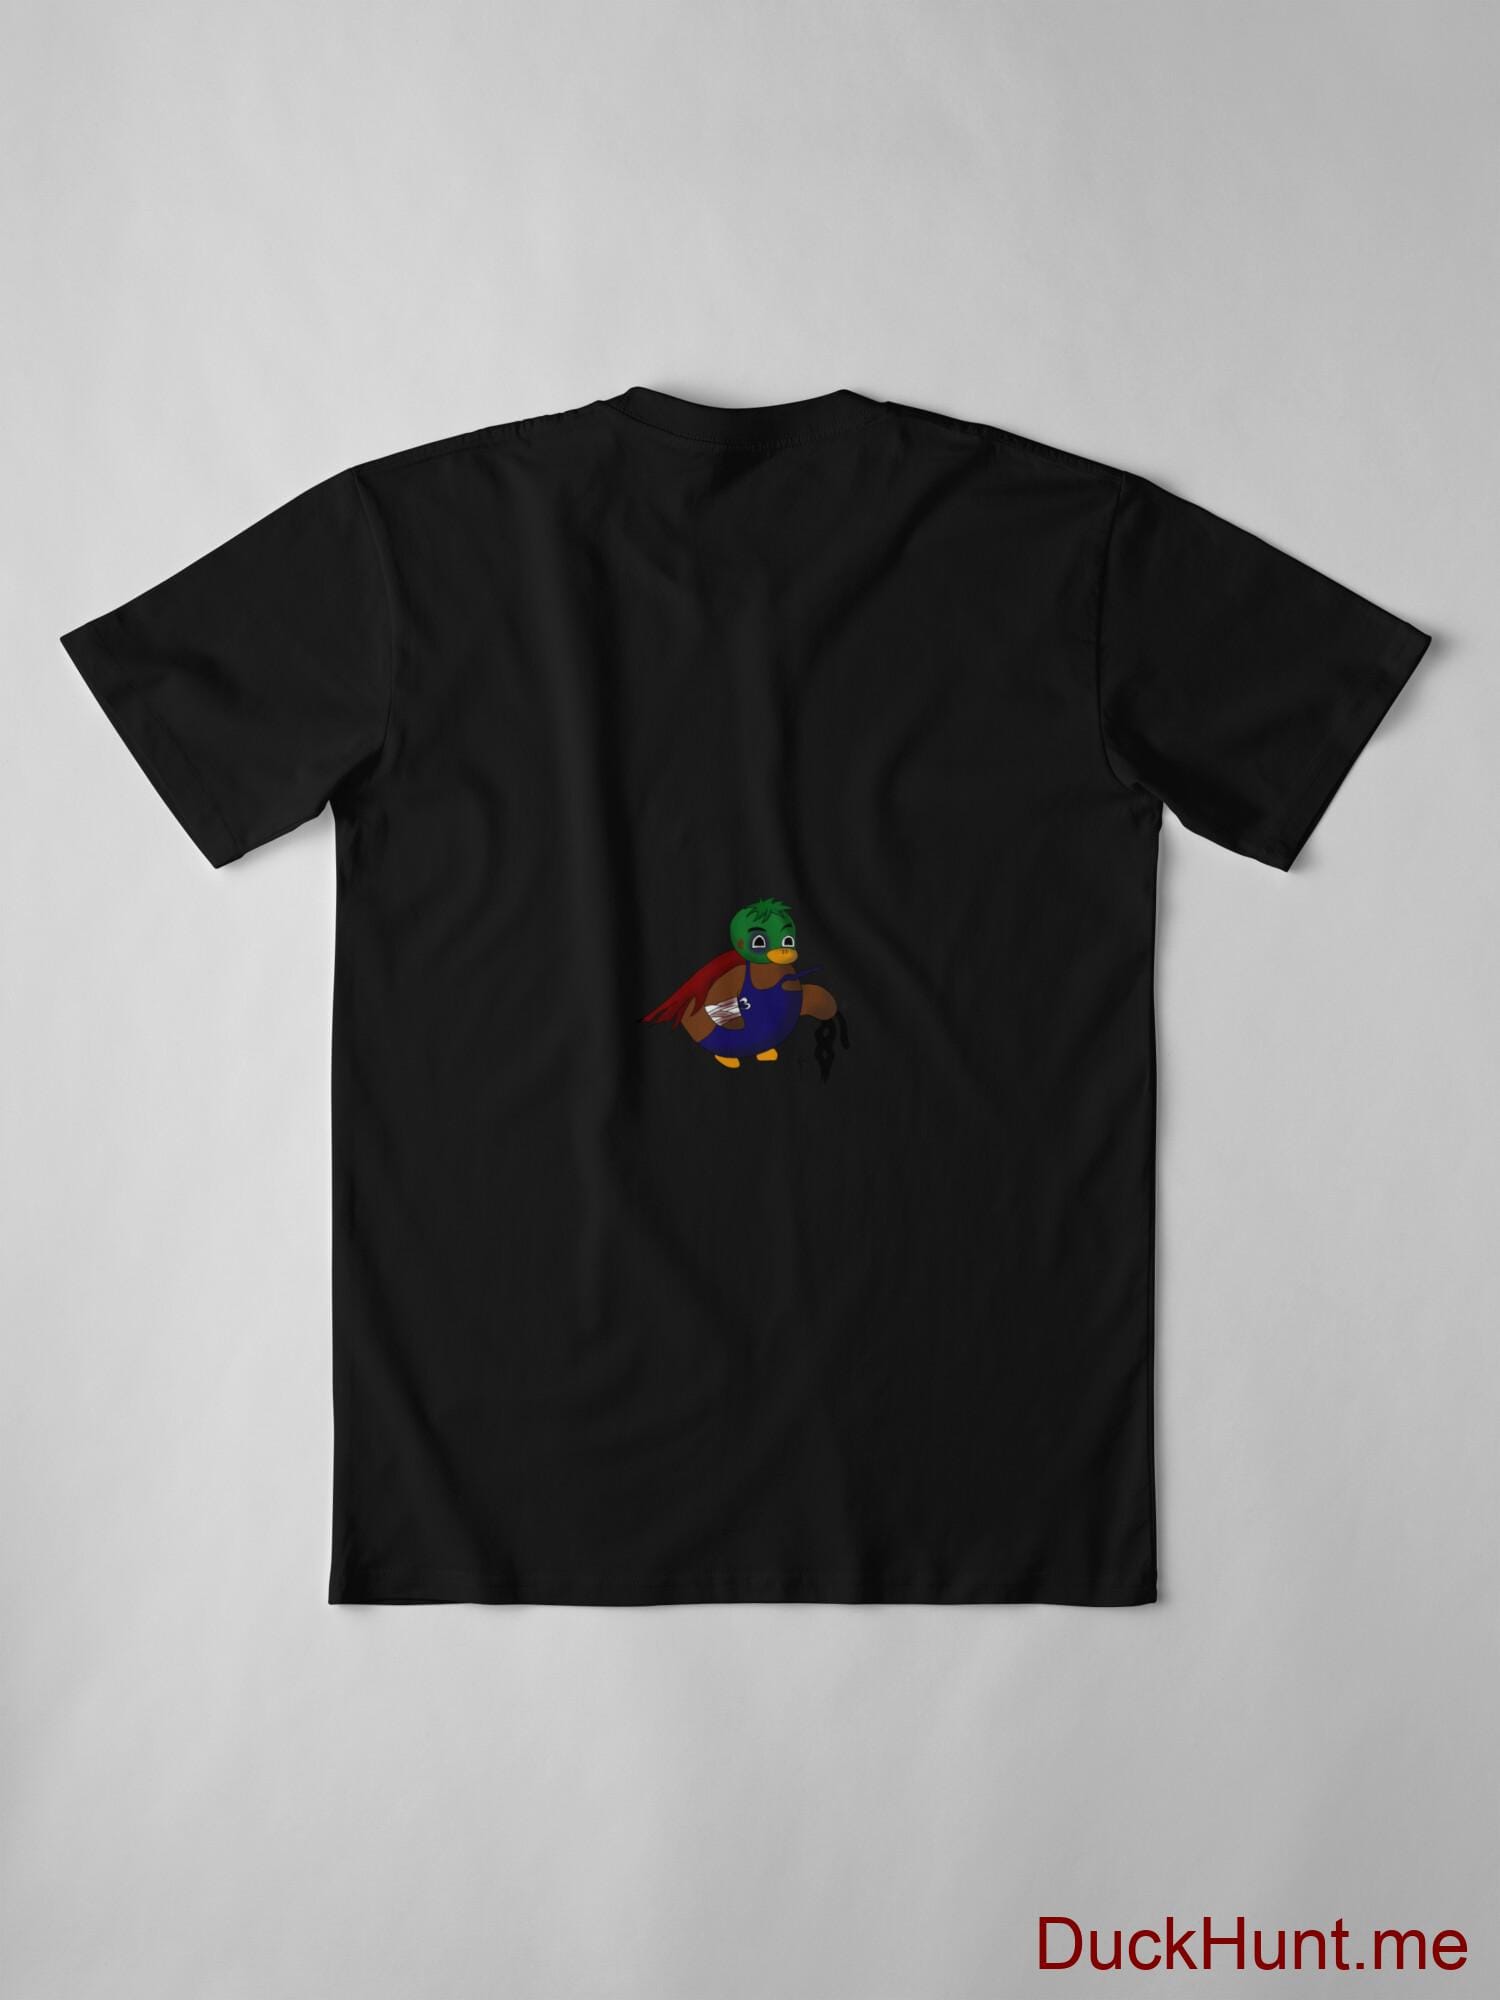 Dead DuckHunt Boss (smokeless) Black Premium T-Shirt (Back printed) alternative image 2